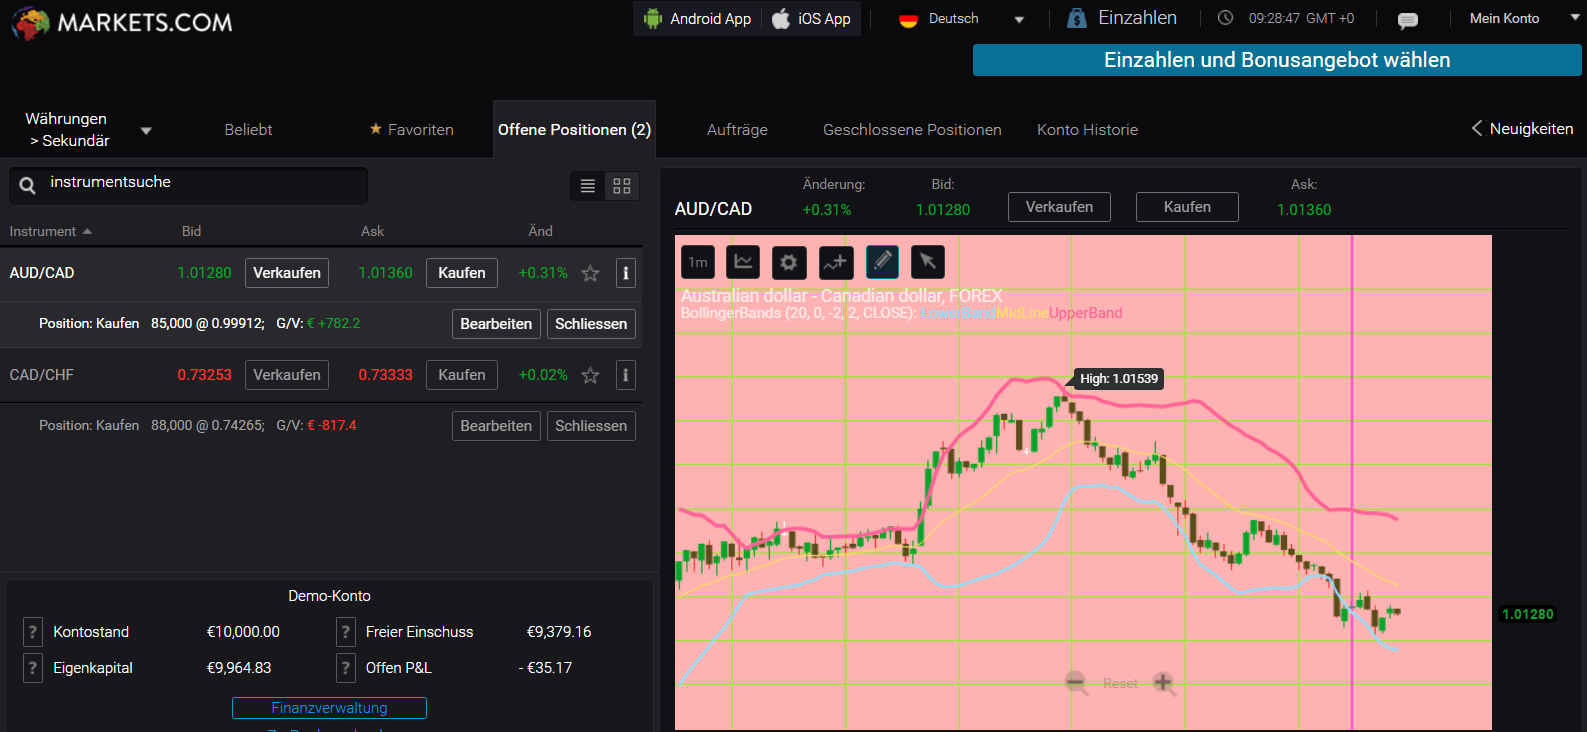 Markets.com Chart